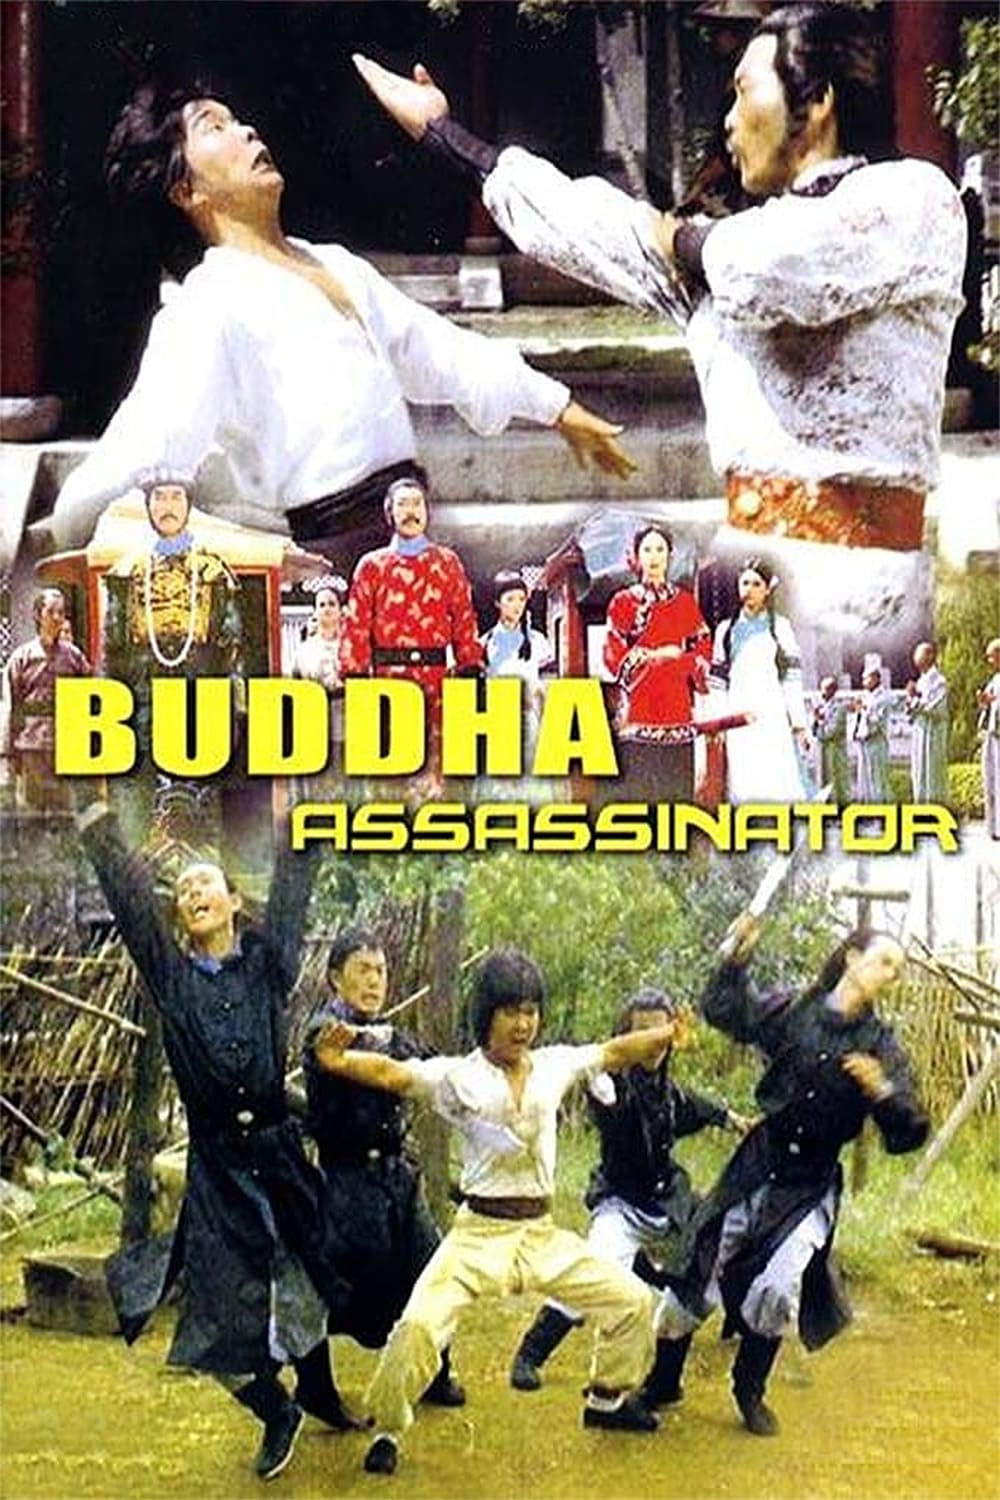 The Buddha Assassinator (1980)